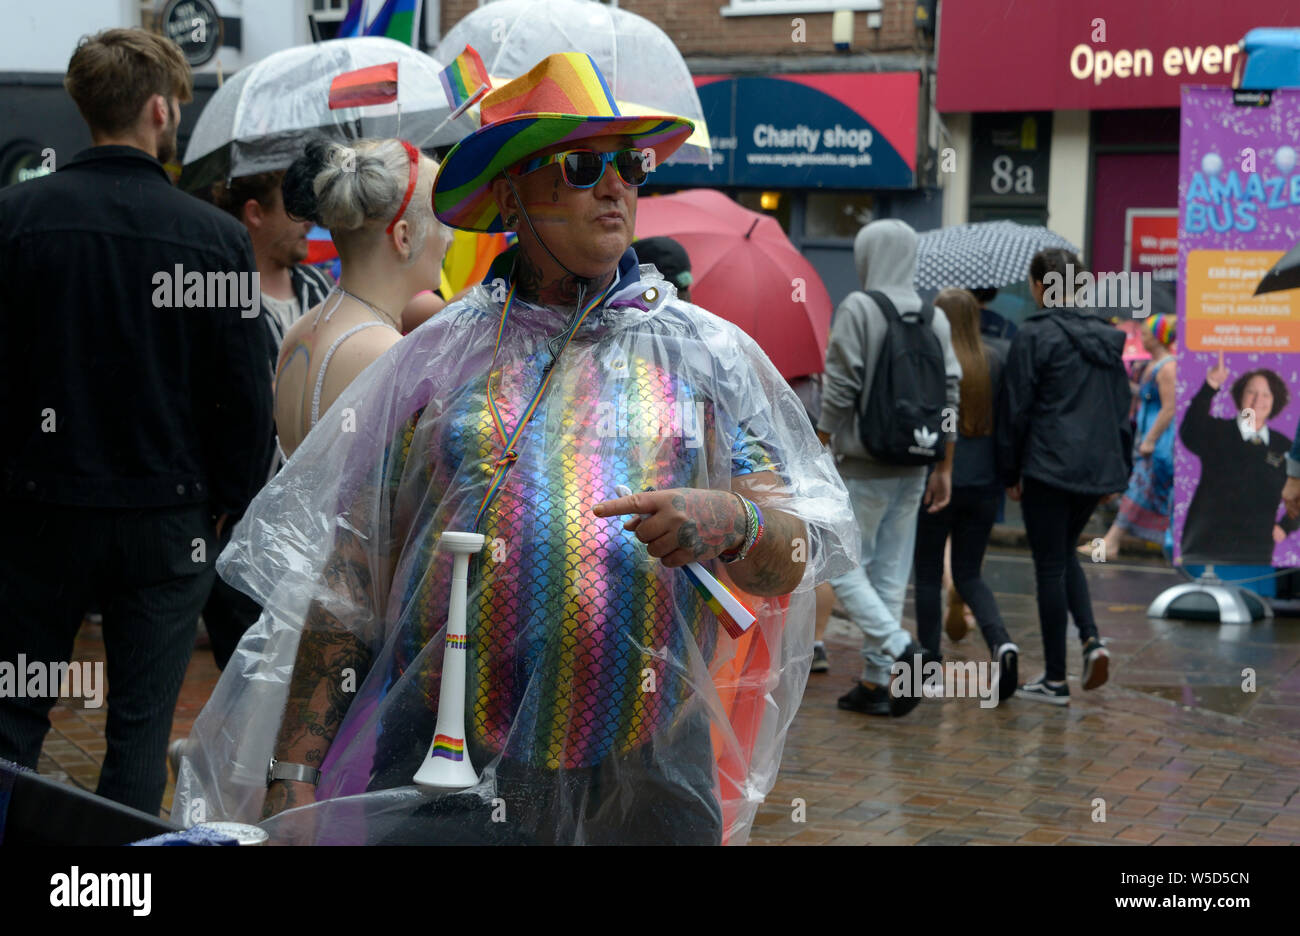 Alte Kerl in Regenbogen, Hut & Shirt, mit klaren Regencape, im Pride event Stockfoto